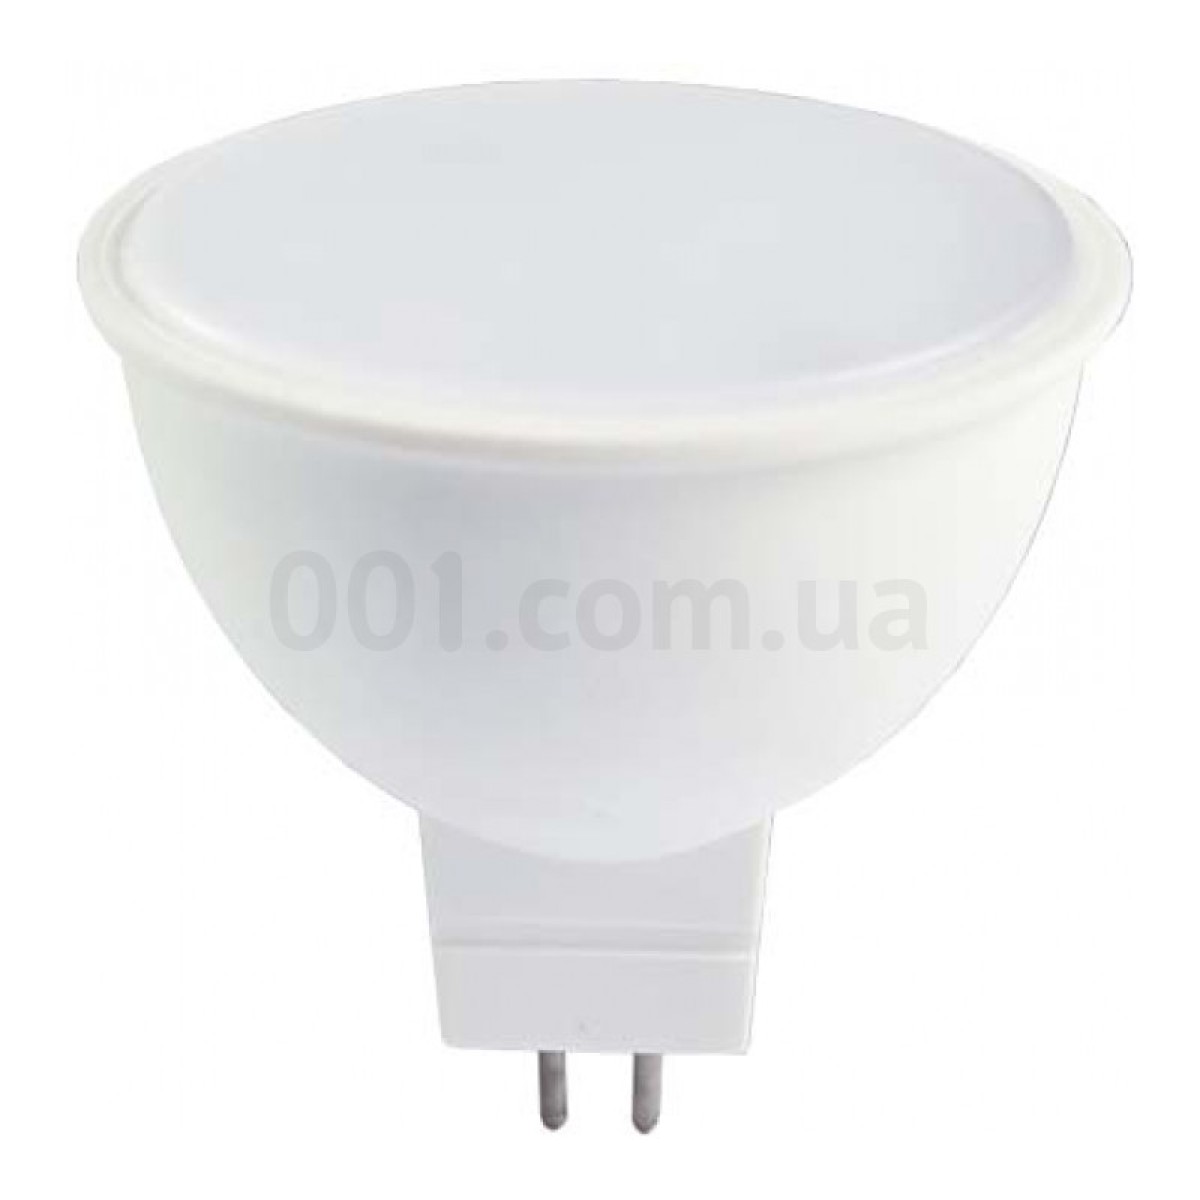 Светодиодная лампа LB-716 MR16 6Вт 4000K G5.3, Feron 98_98.jpg